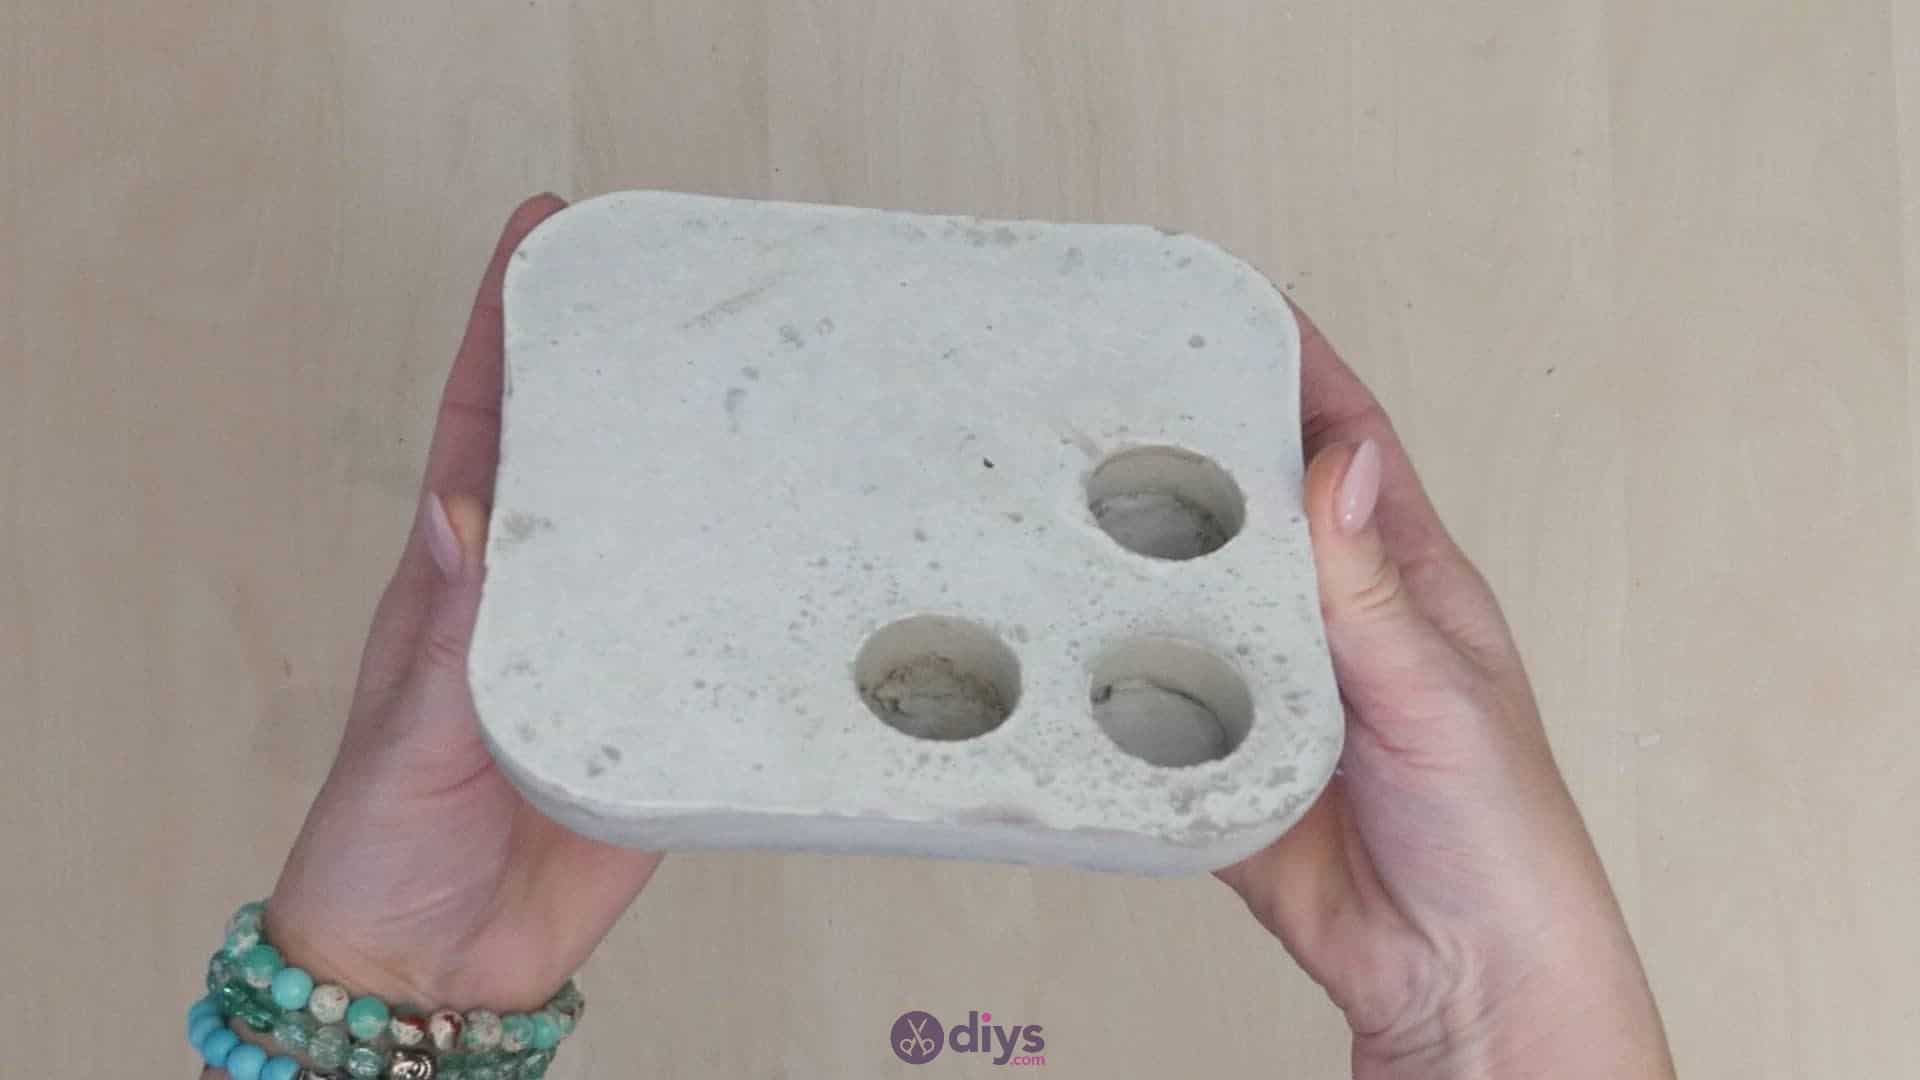 Diy concrete candle holder plate step 6b